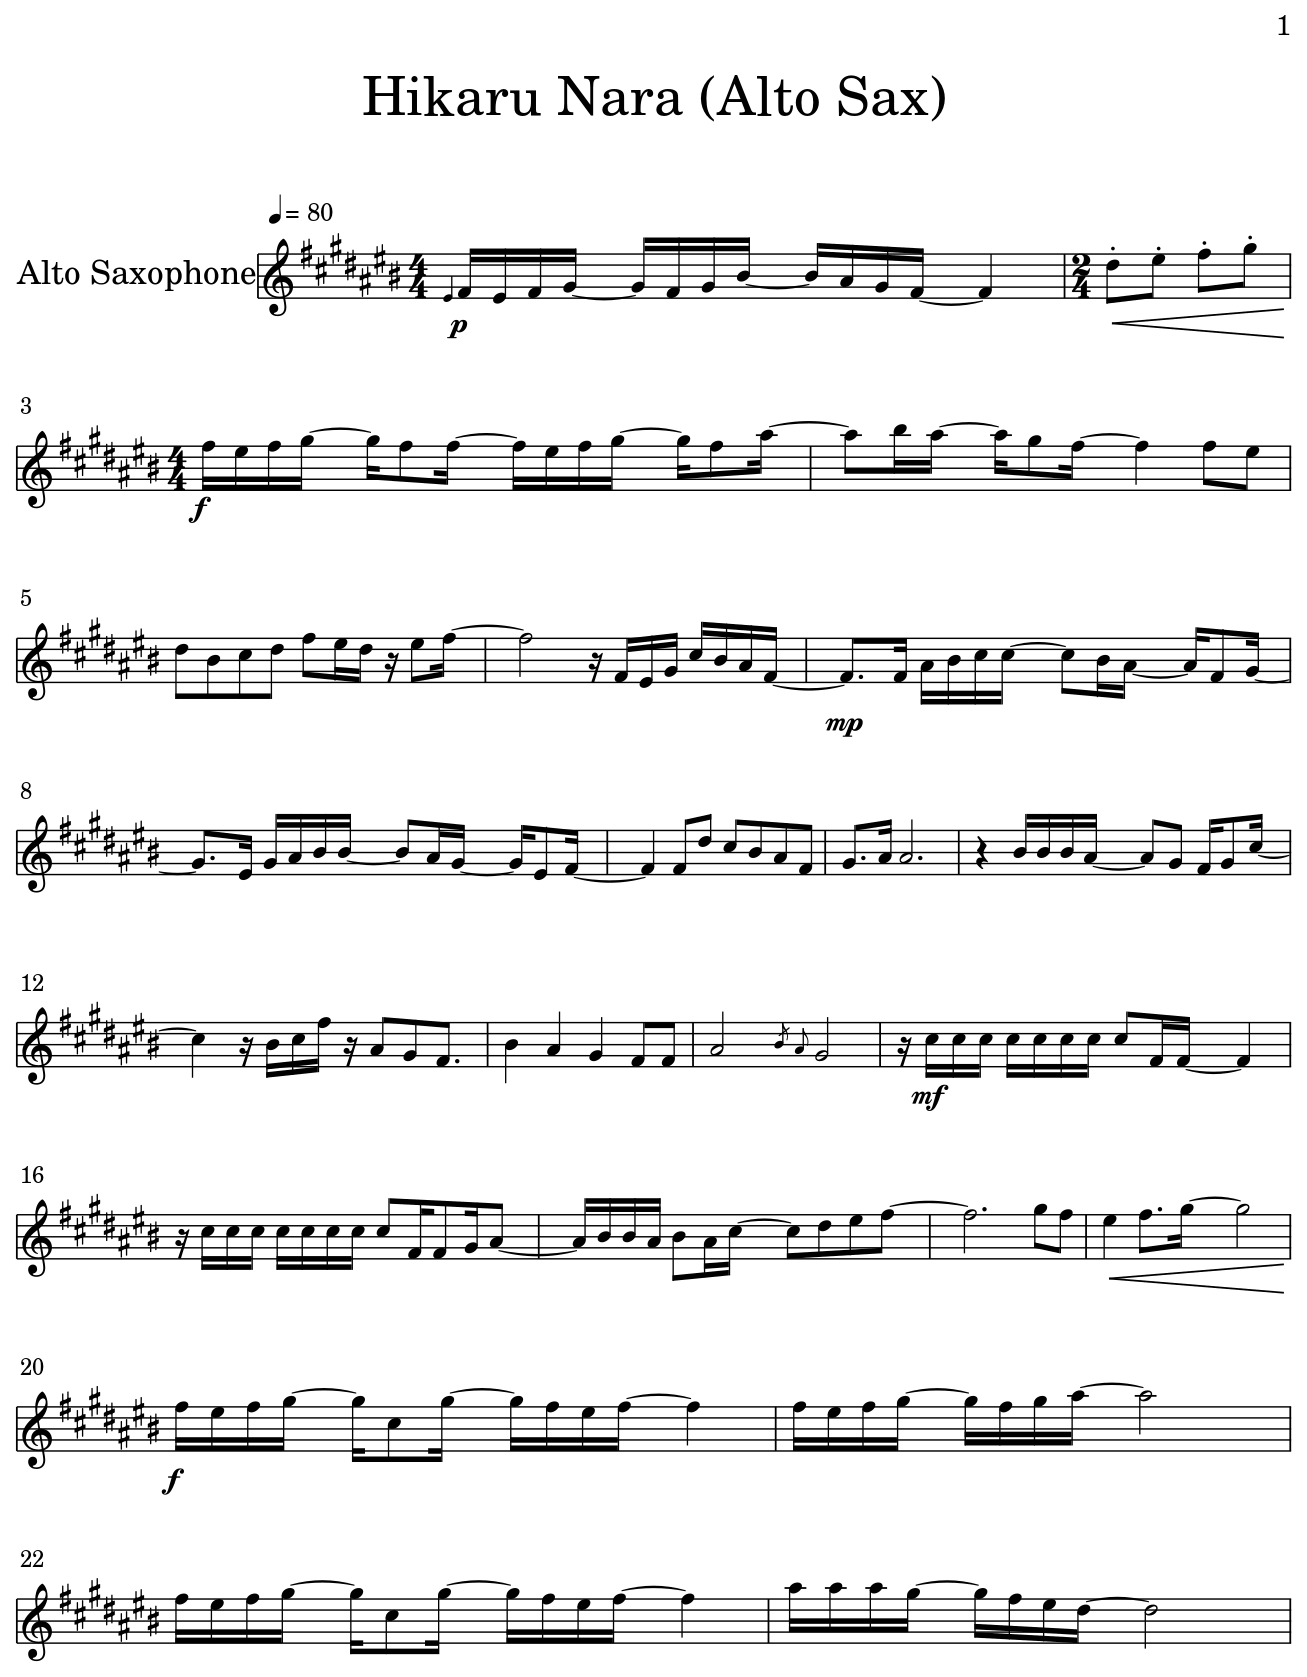 hikaru nara Sheet Music - hikaru nara Score •